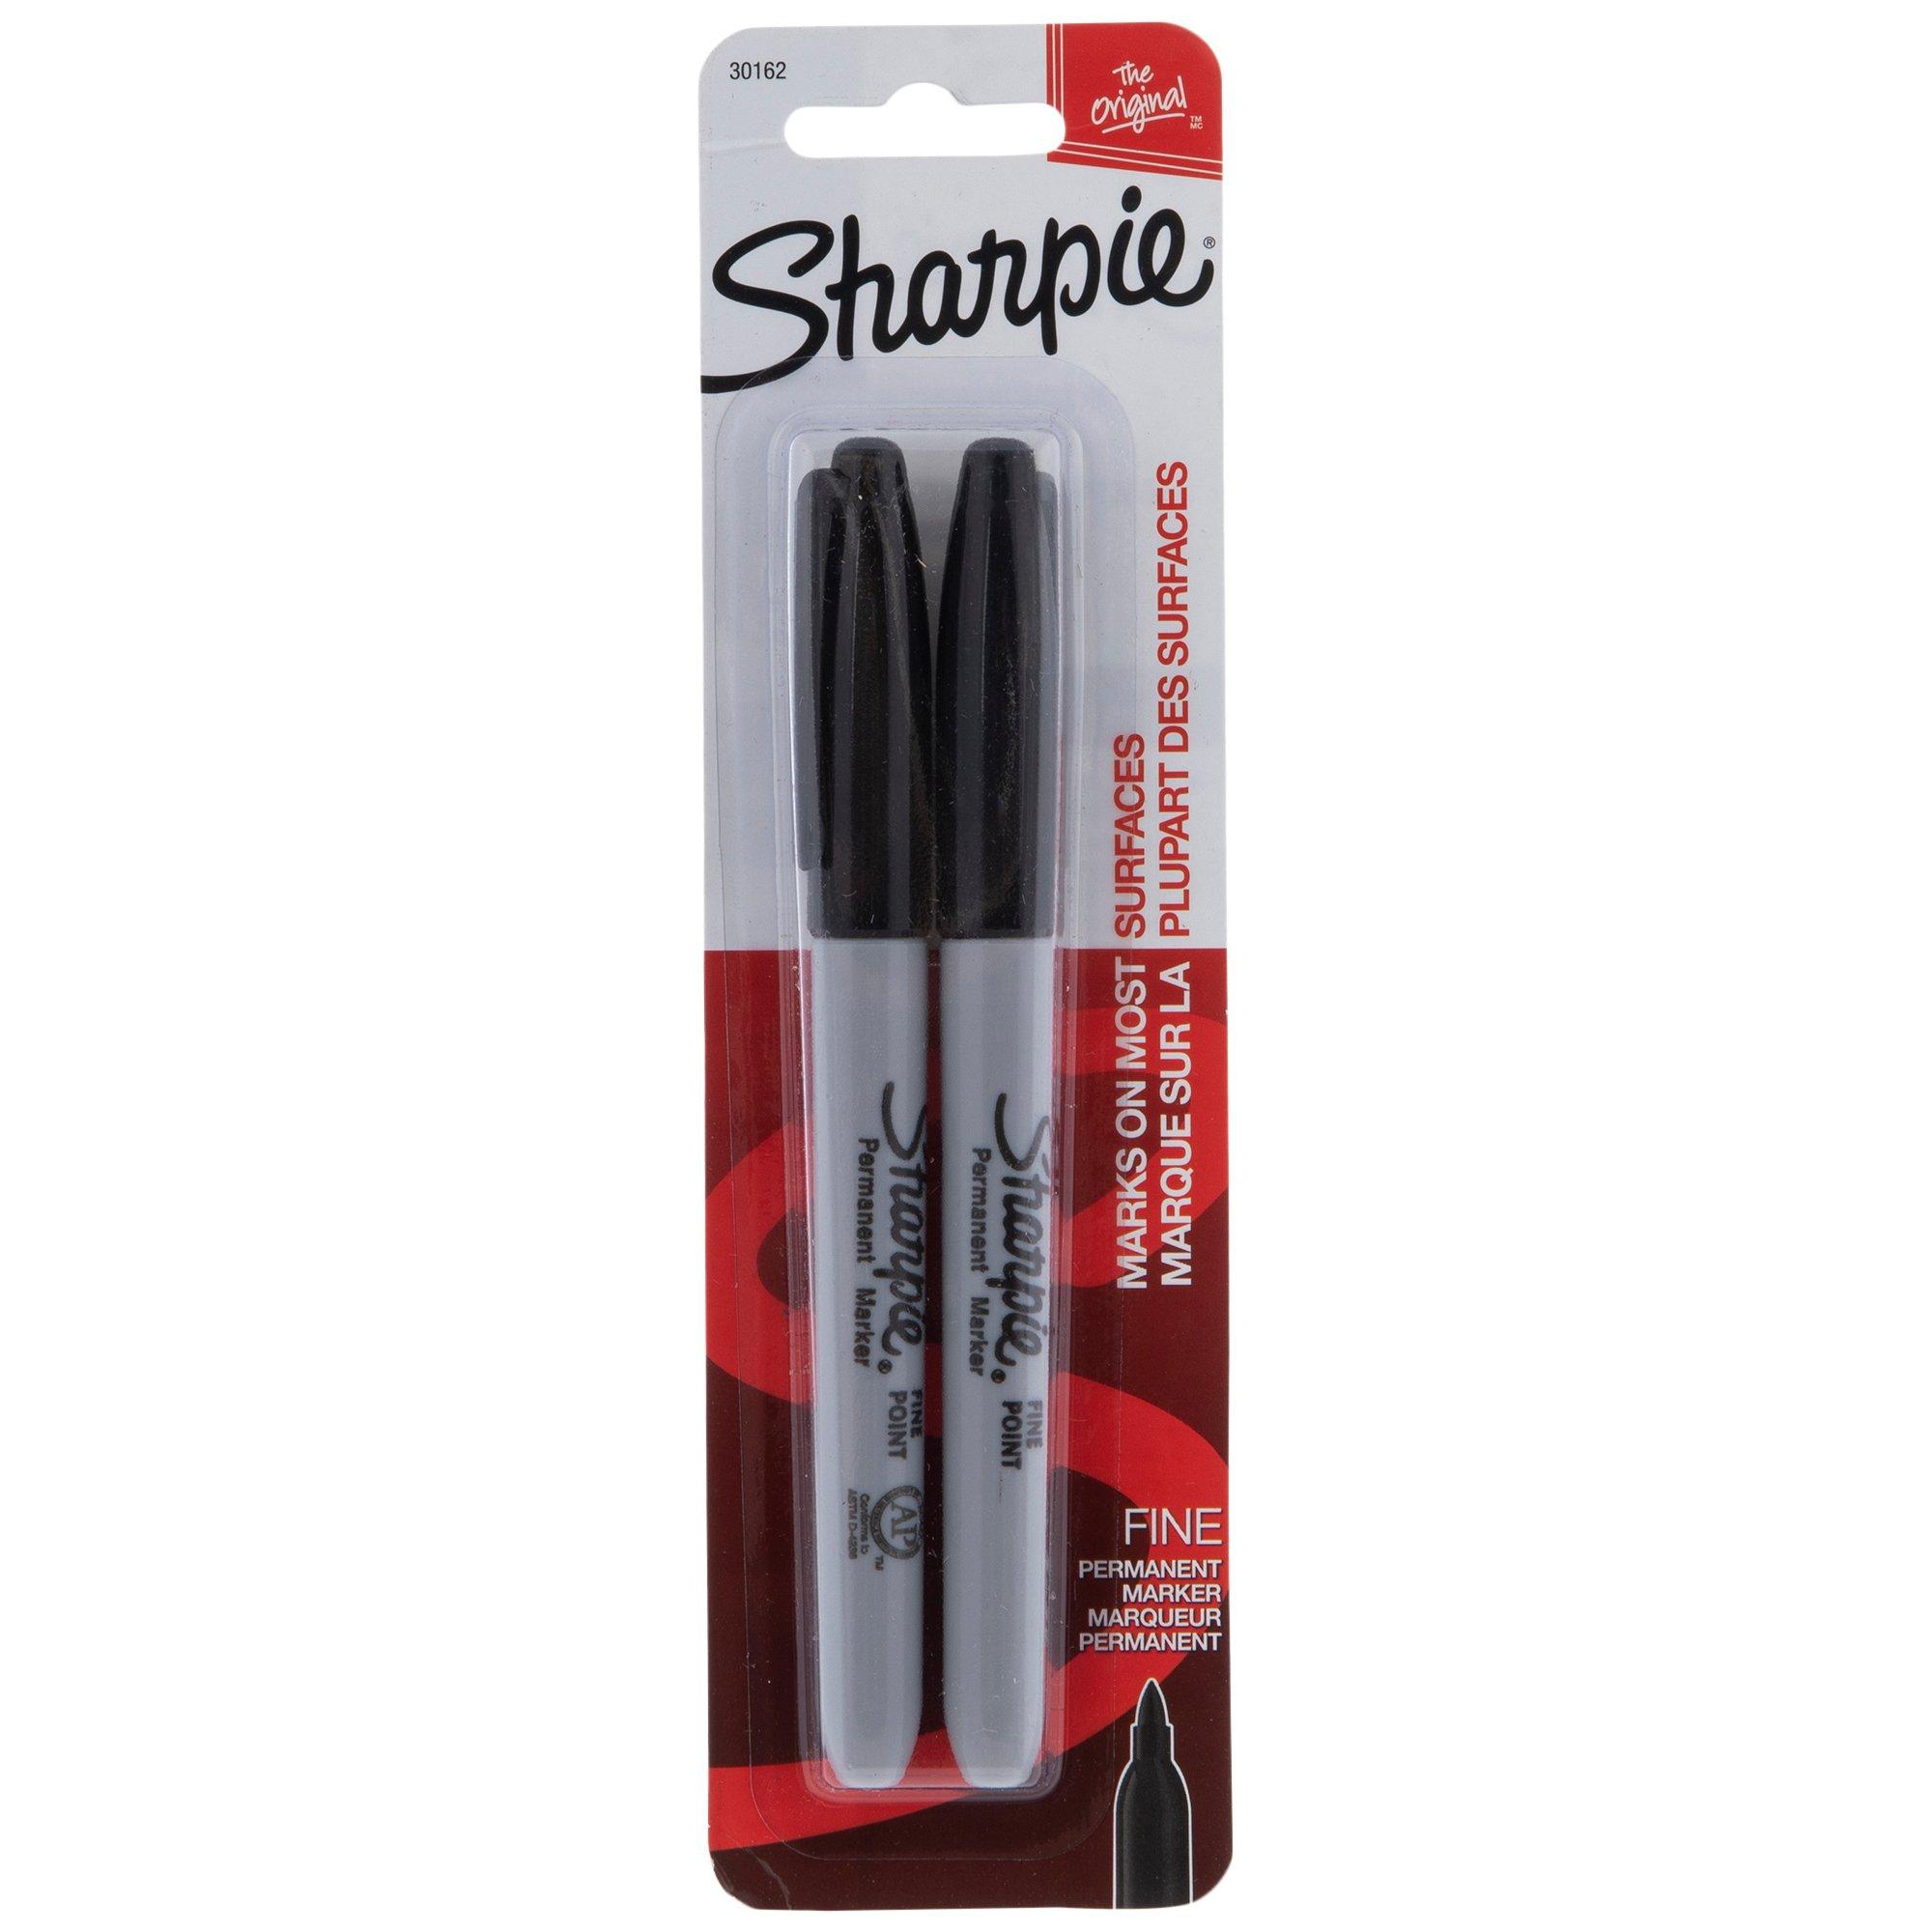 Sharpie Fine Tip Markers - 2 Piece Set, Hobby Lobby